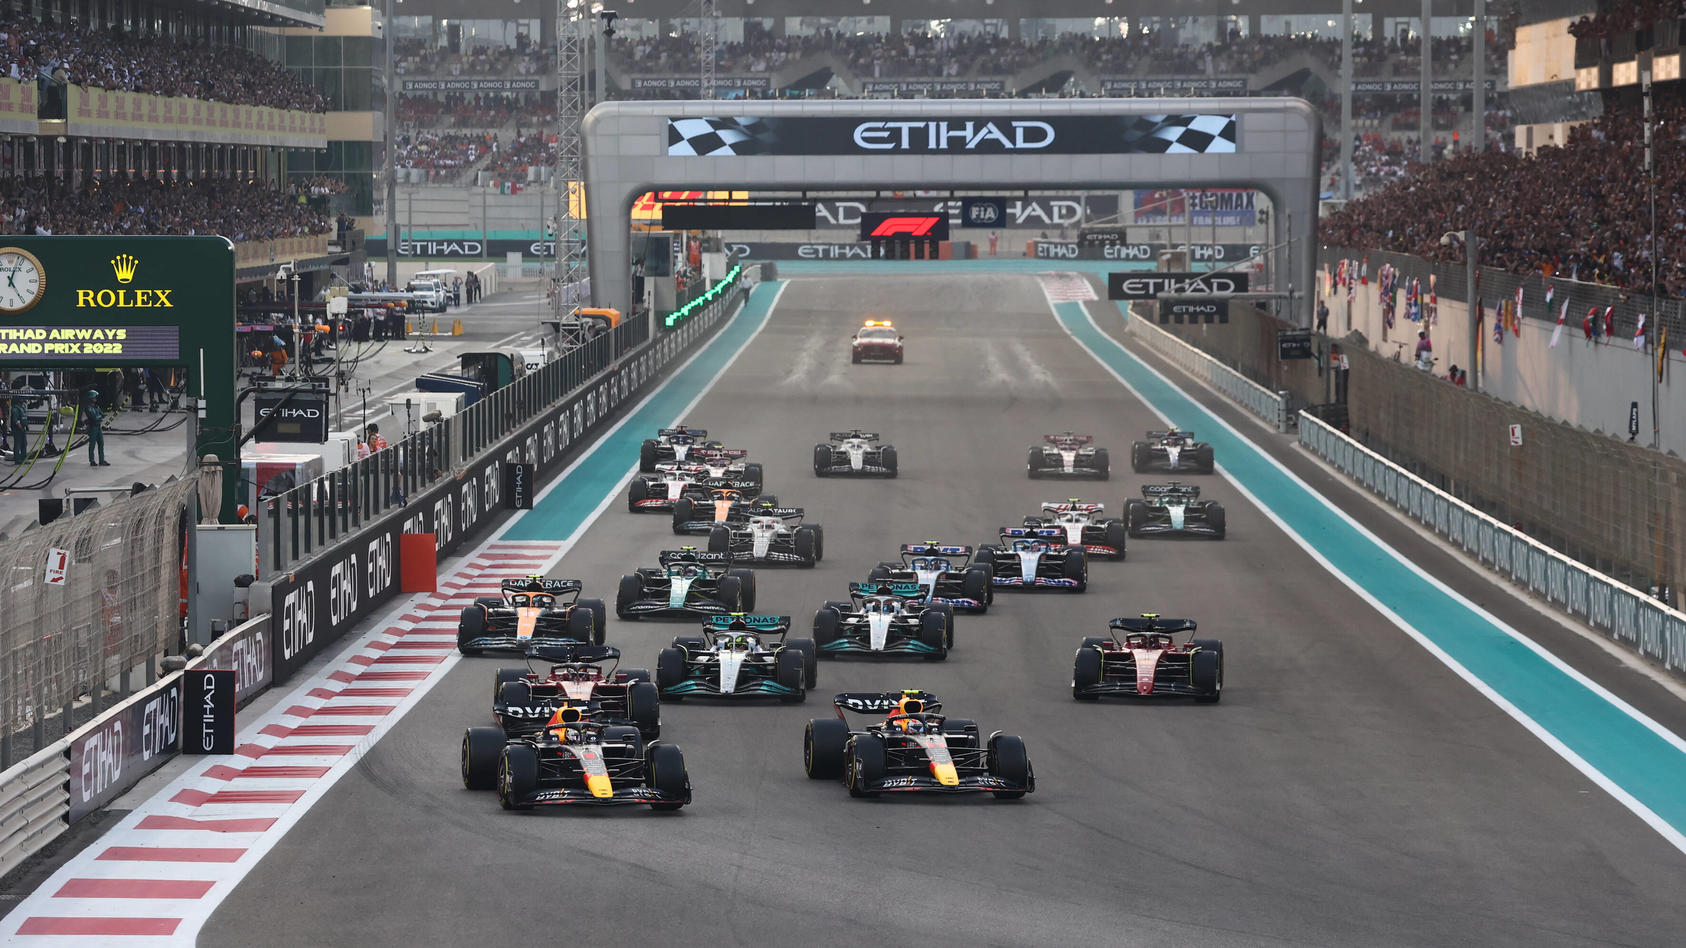  F1 Abu Dhabi Grand Prix Start of the Formula 1 Abu Dhabi Grand Prix at Yas Marina Circuit in Abu Dhabi, United Arab Emirates on November 20, 2022. Abu Dhabi United Arab Emirates PUBLICATIONxNOTxINxFRA Copyright: xJakubxPorzyckix originalFilename:por